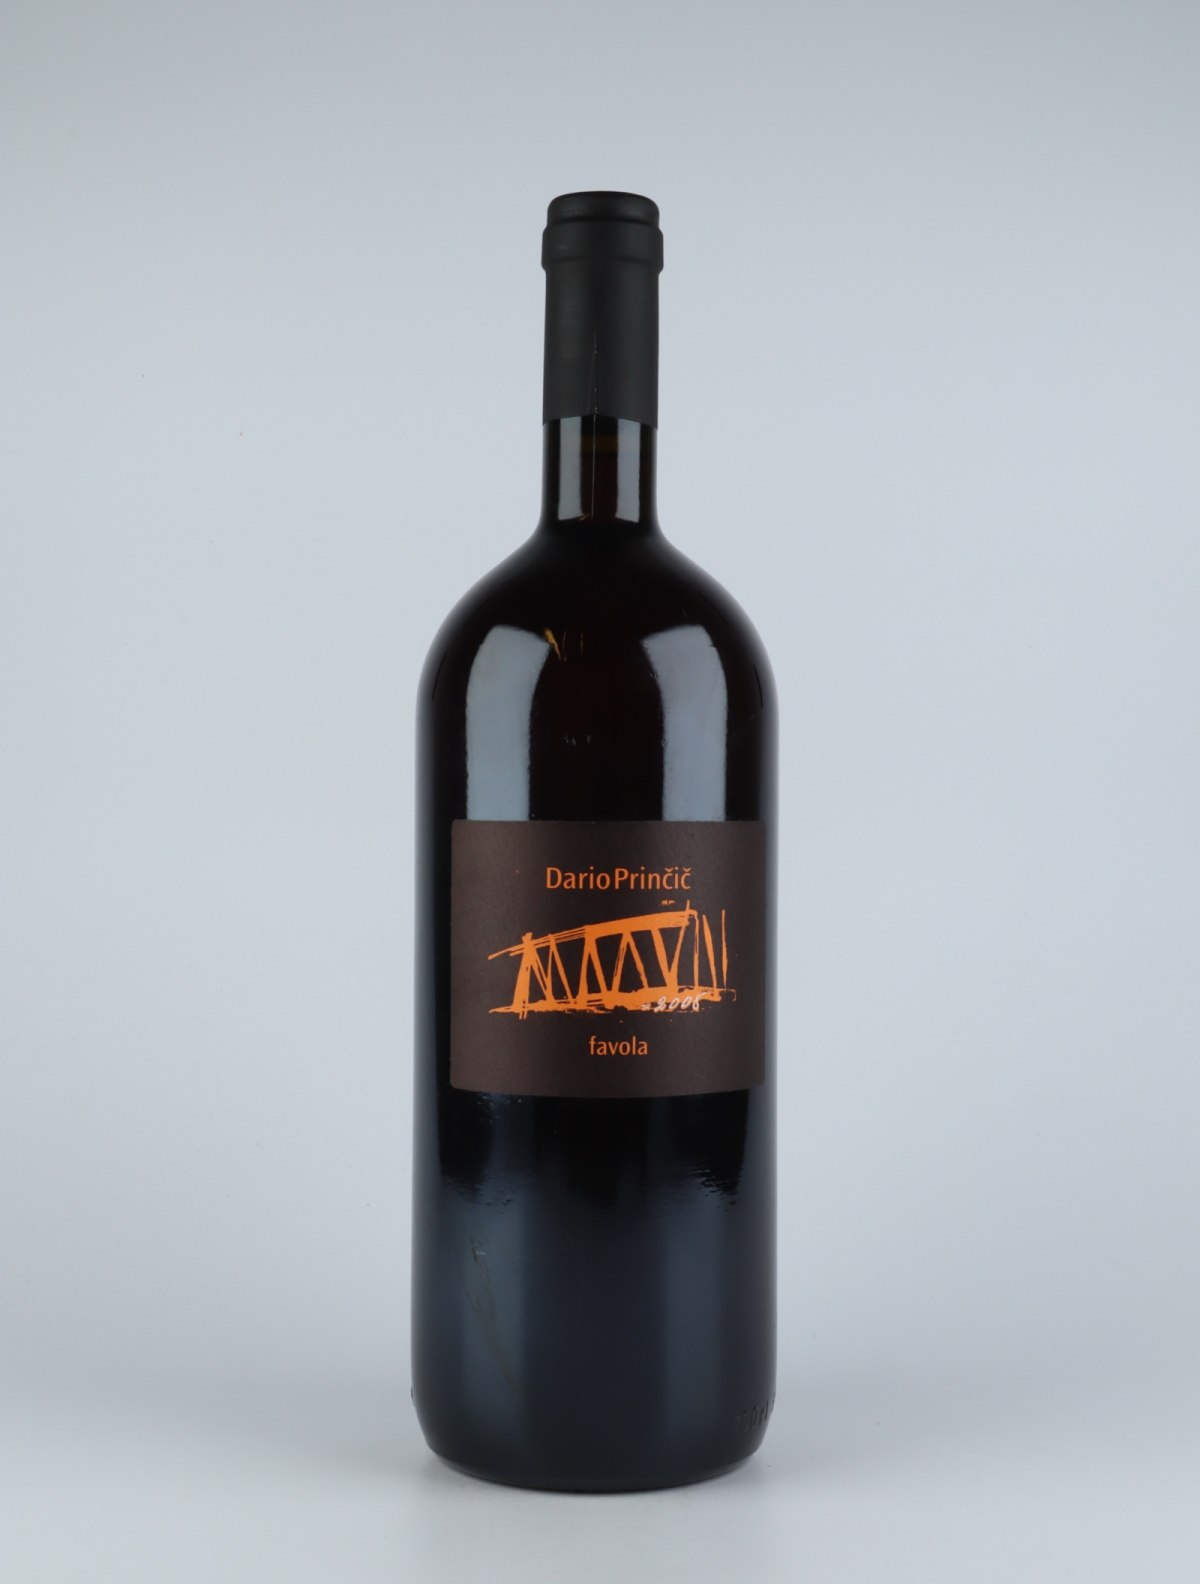 A bottle 2008 Favola Bianco Orange wine from Dario Princic, Friuli in Italy